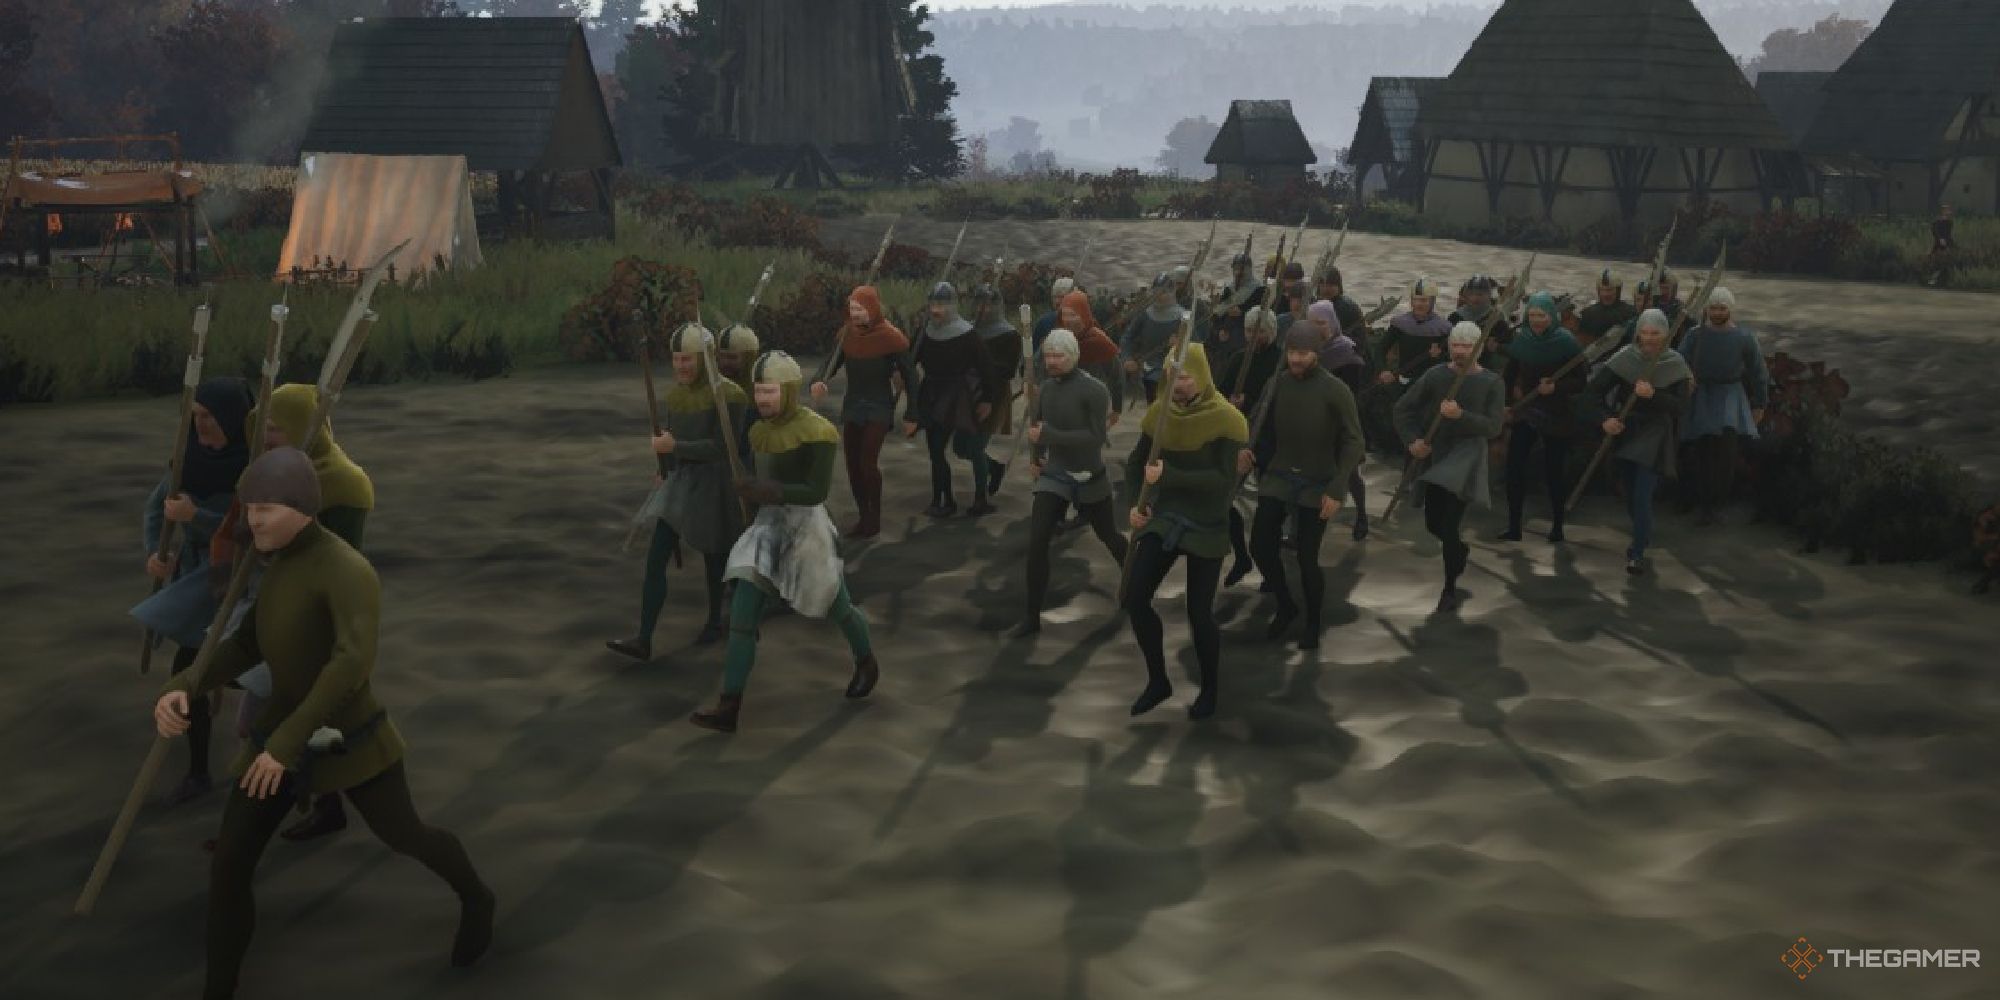 manor lords militia walking into battle